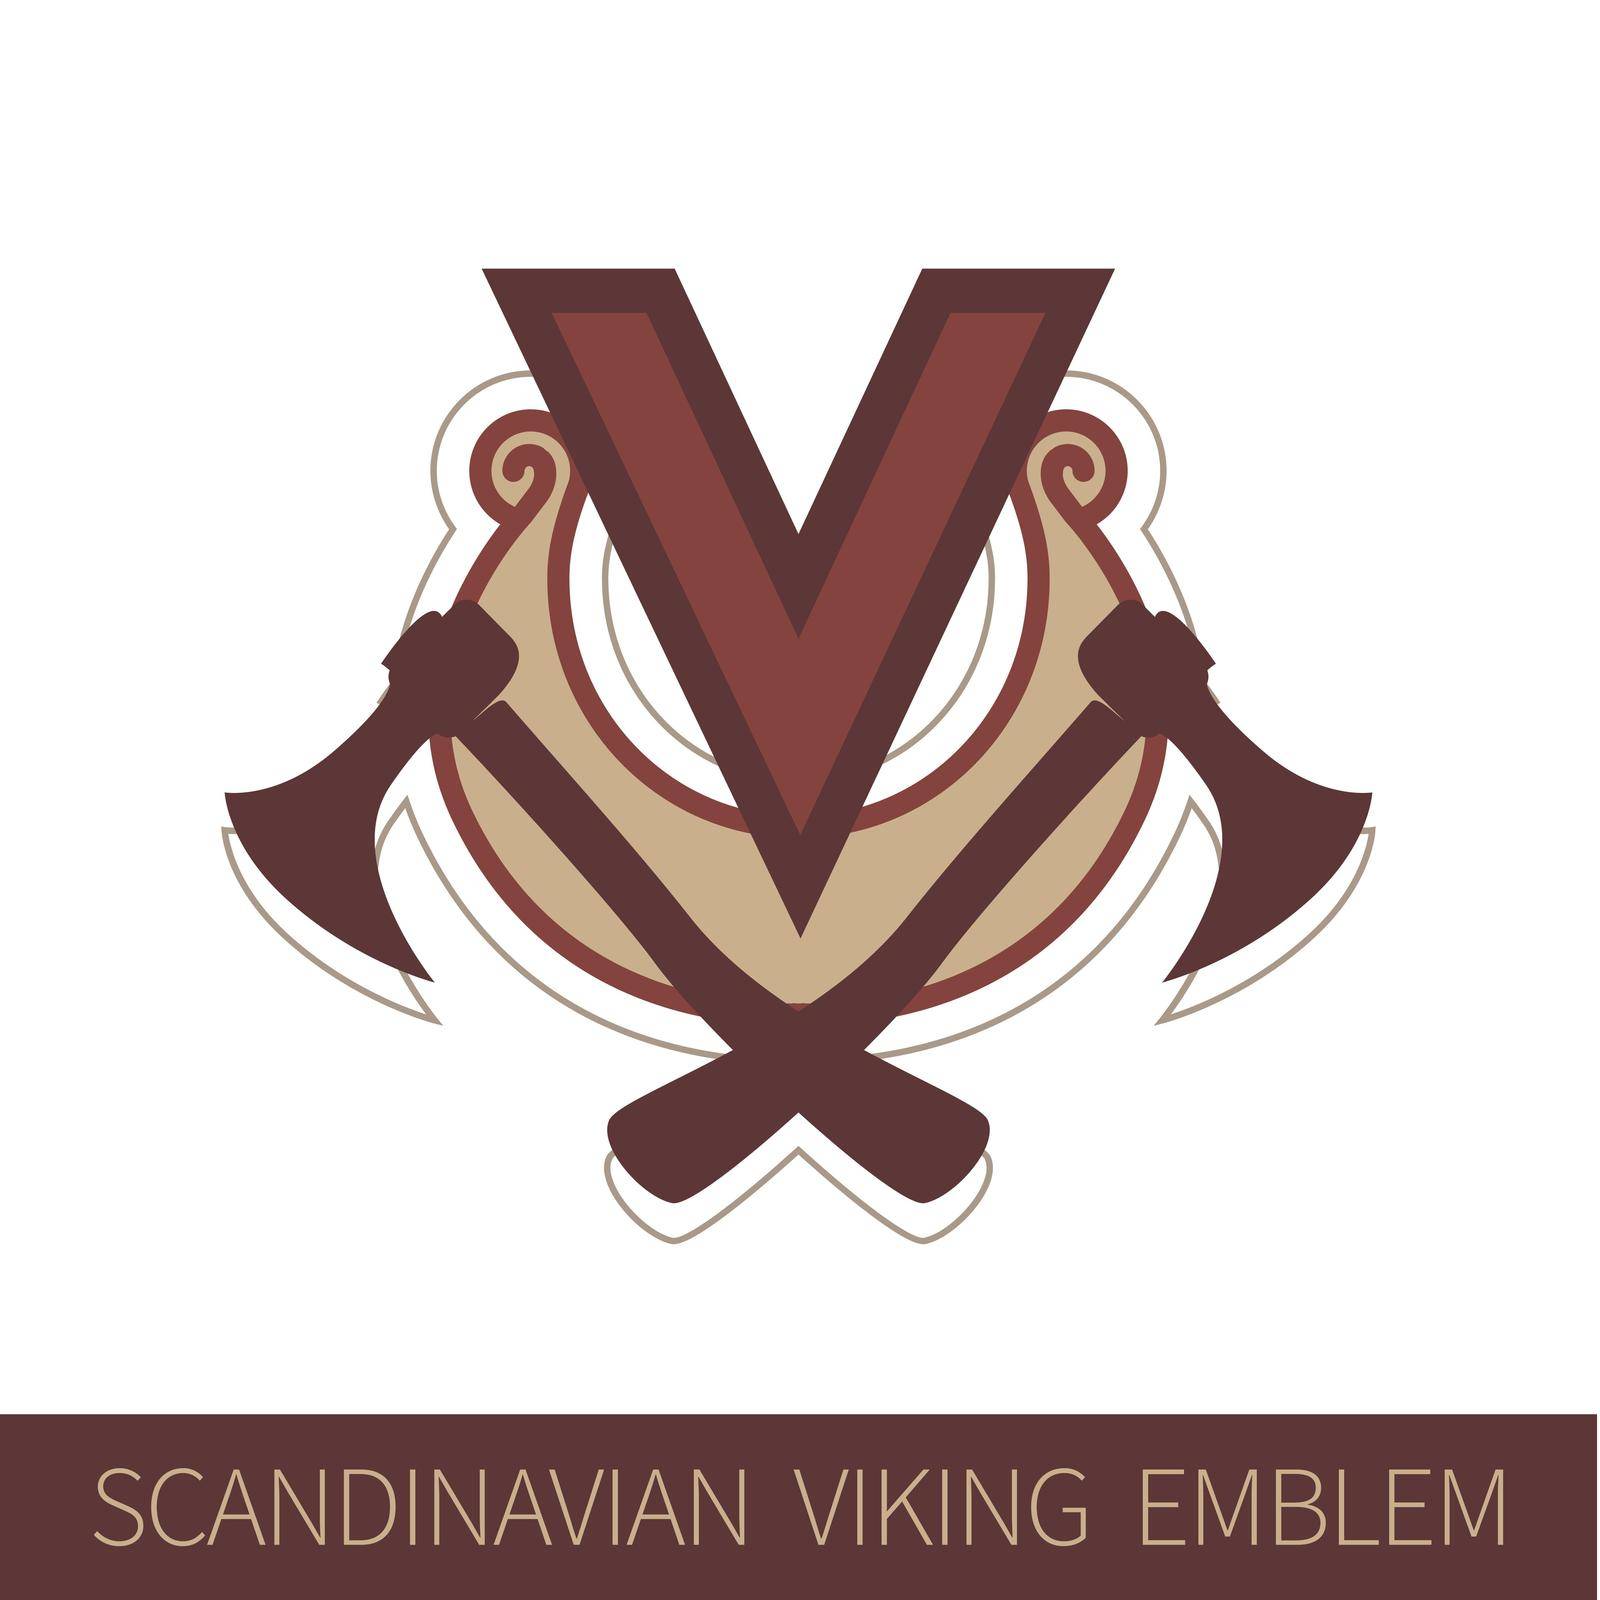 Scandinavian Viking Emblem by macroarting